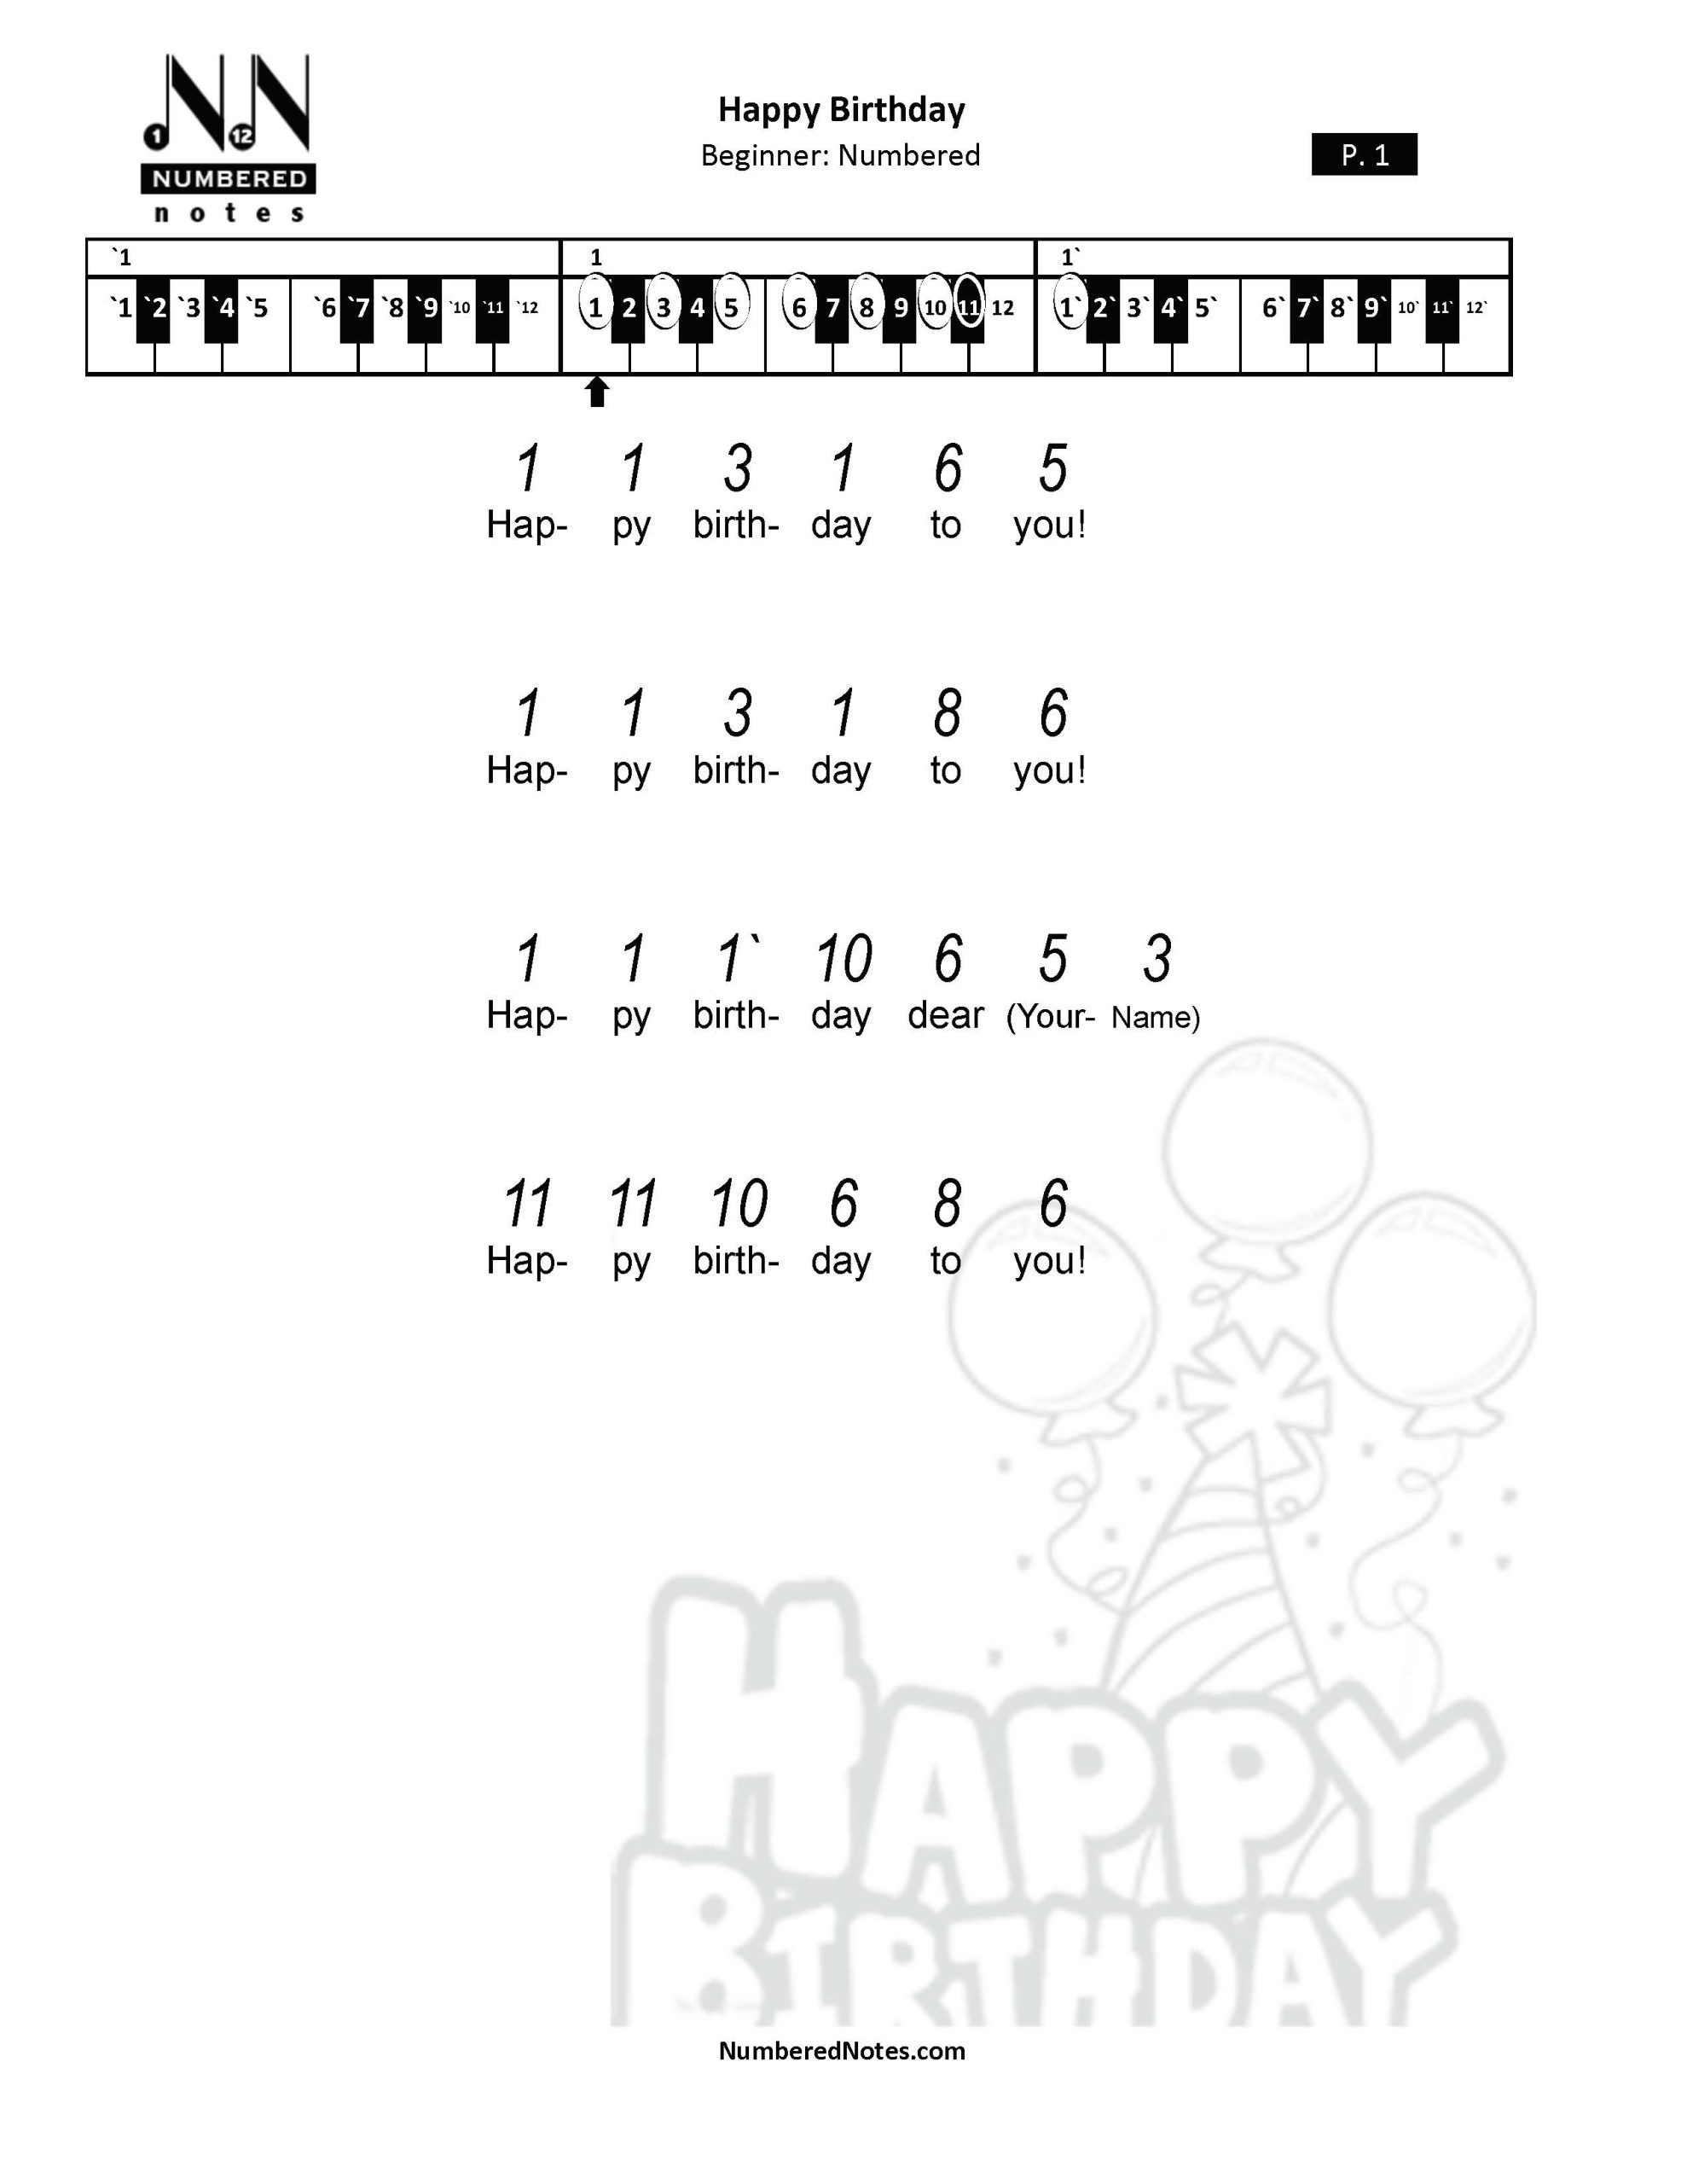 xylophone-chords-happy-birthday